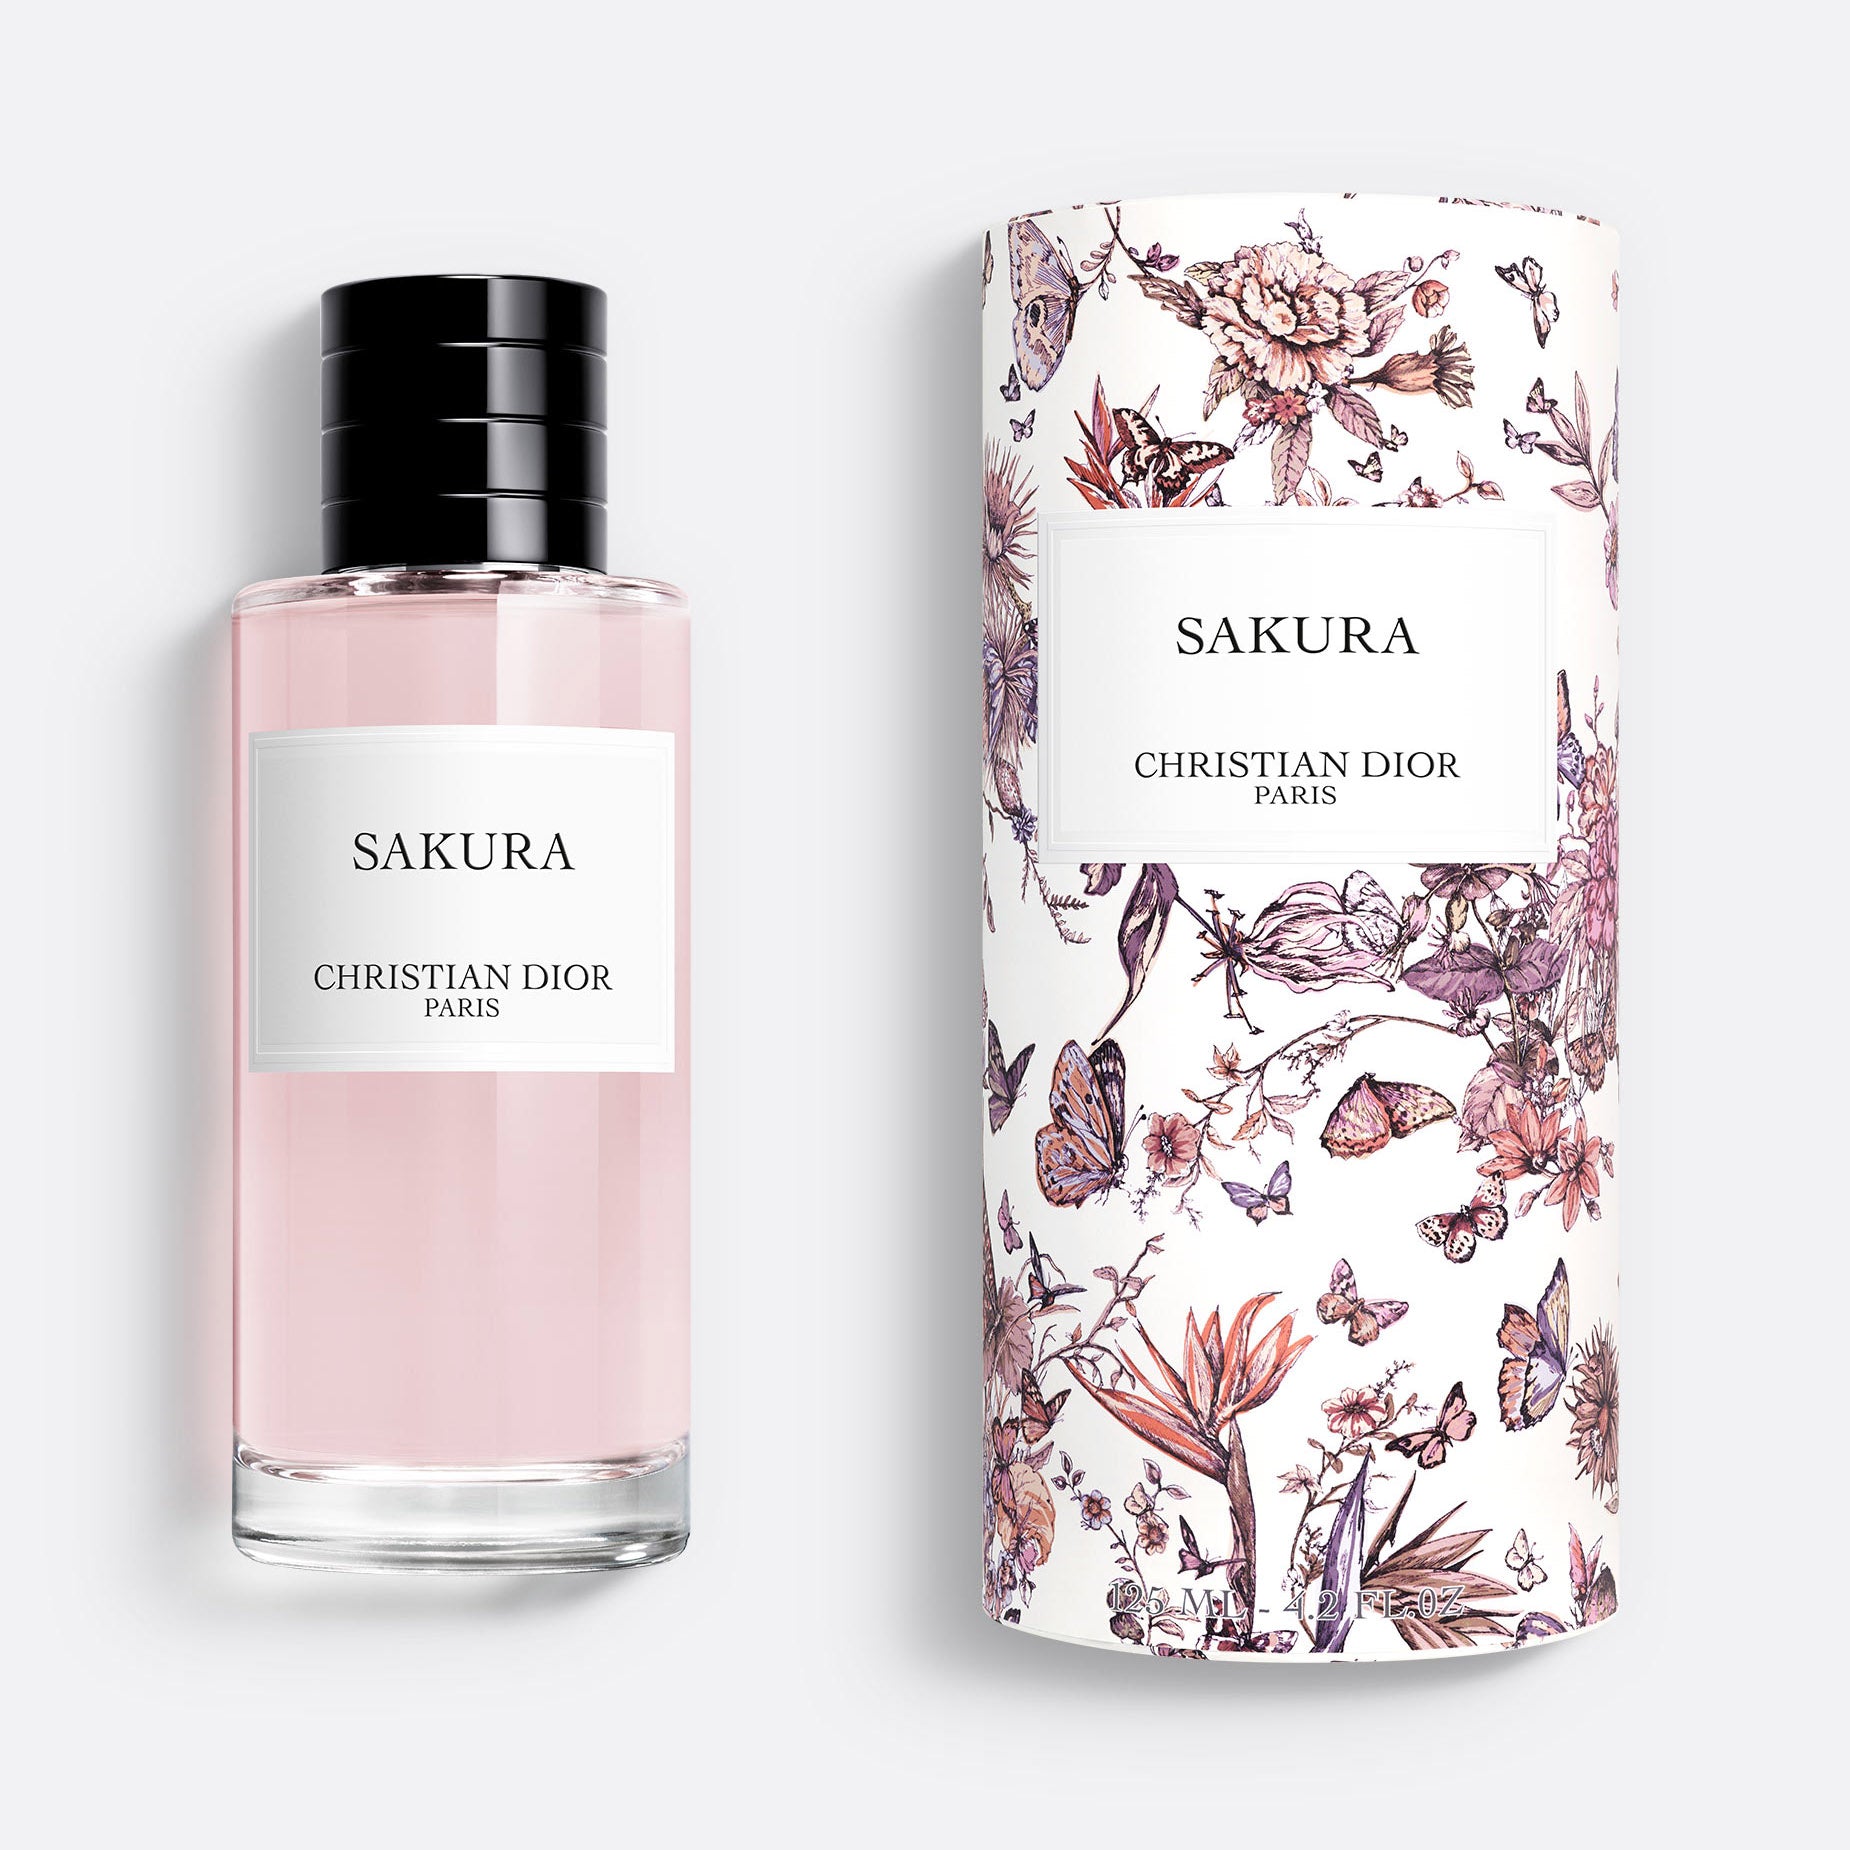 SAKURA – LIMITED EDITION ~ Unisex Eau de Parfum – Floral and Musky Notes – Case with Botanical Motif